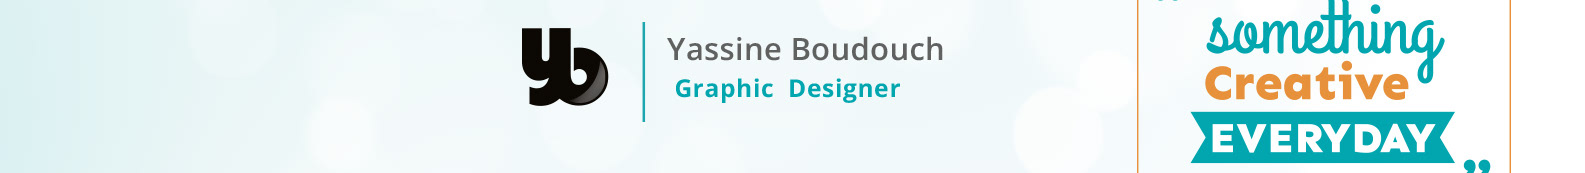 yassine boudouch's profile banner